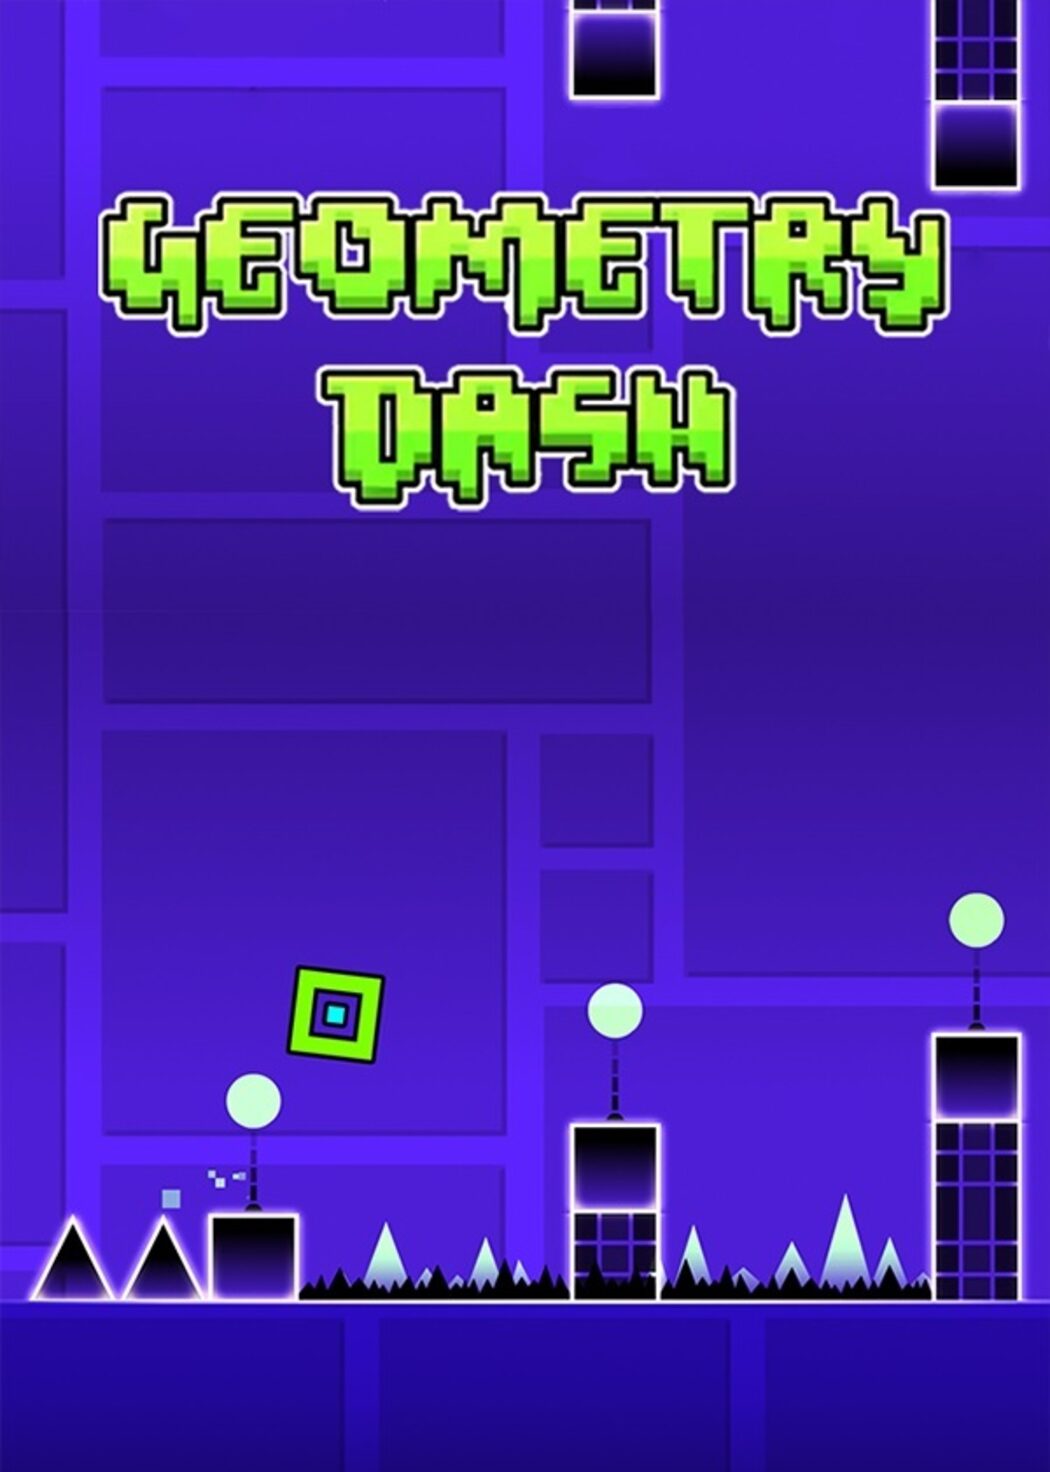 geometry dash computer